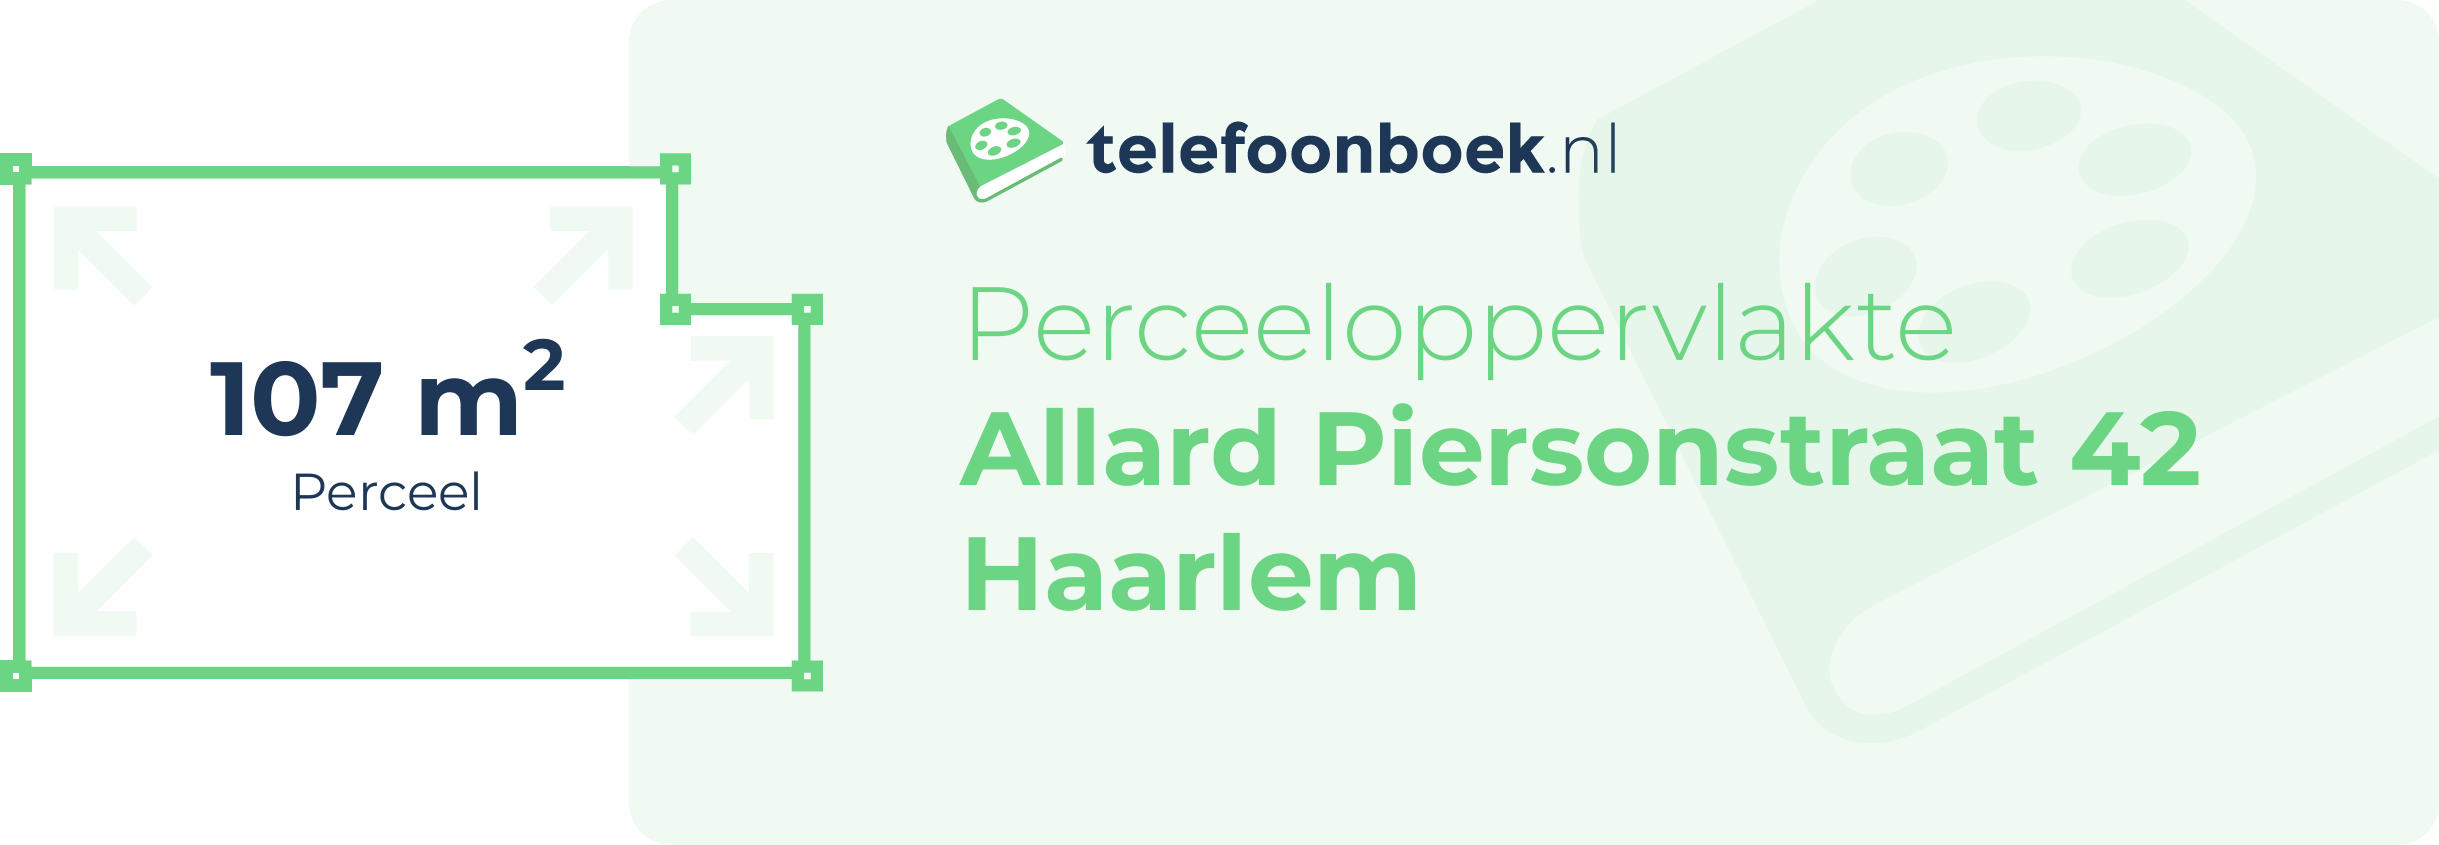 Perceeloppervlakte Allard Piersonstraat 42 Haarlem